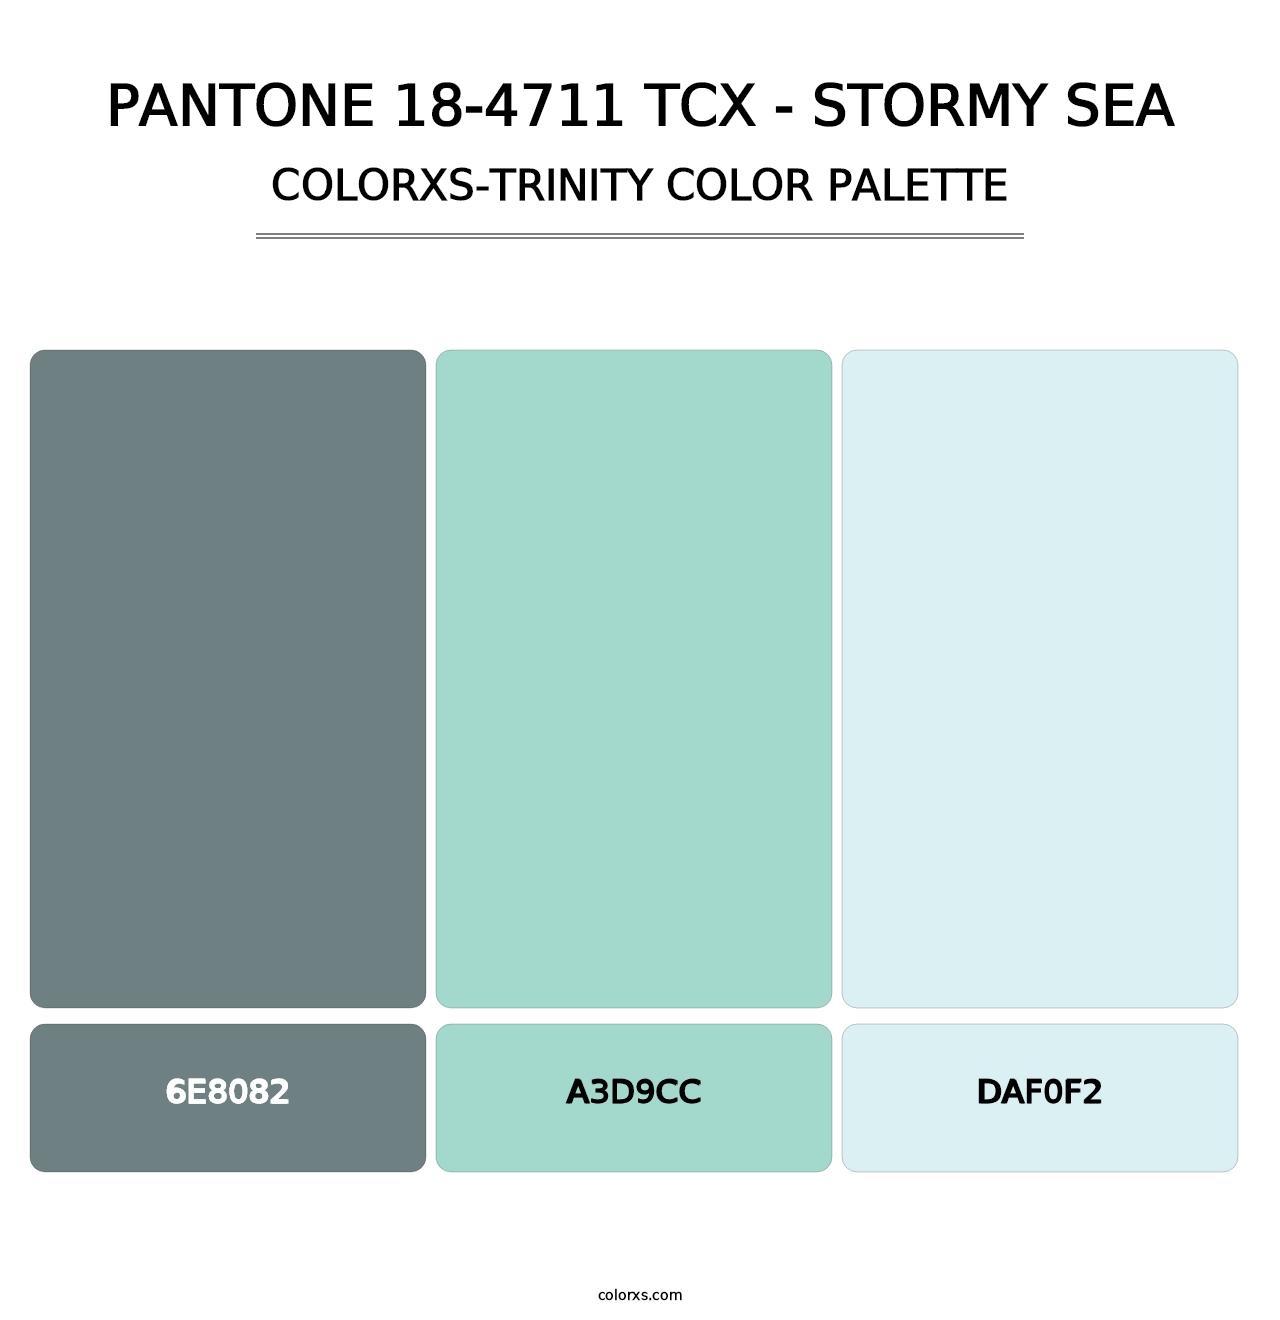 PANTONE 18-4711 TCX - Stormy Sea - Colorxs Trinity Palette